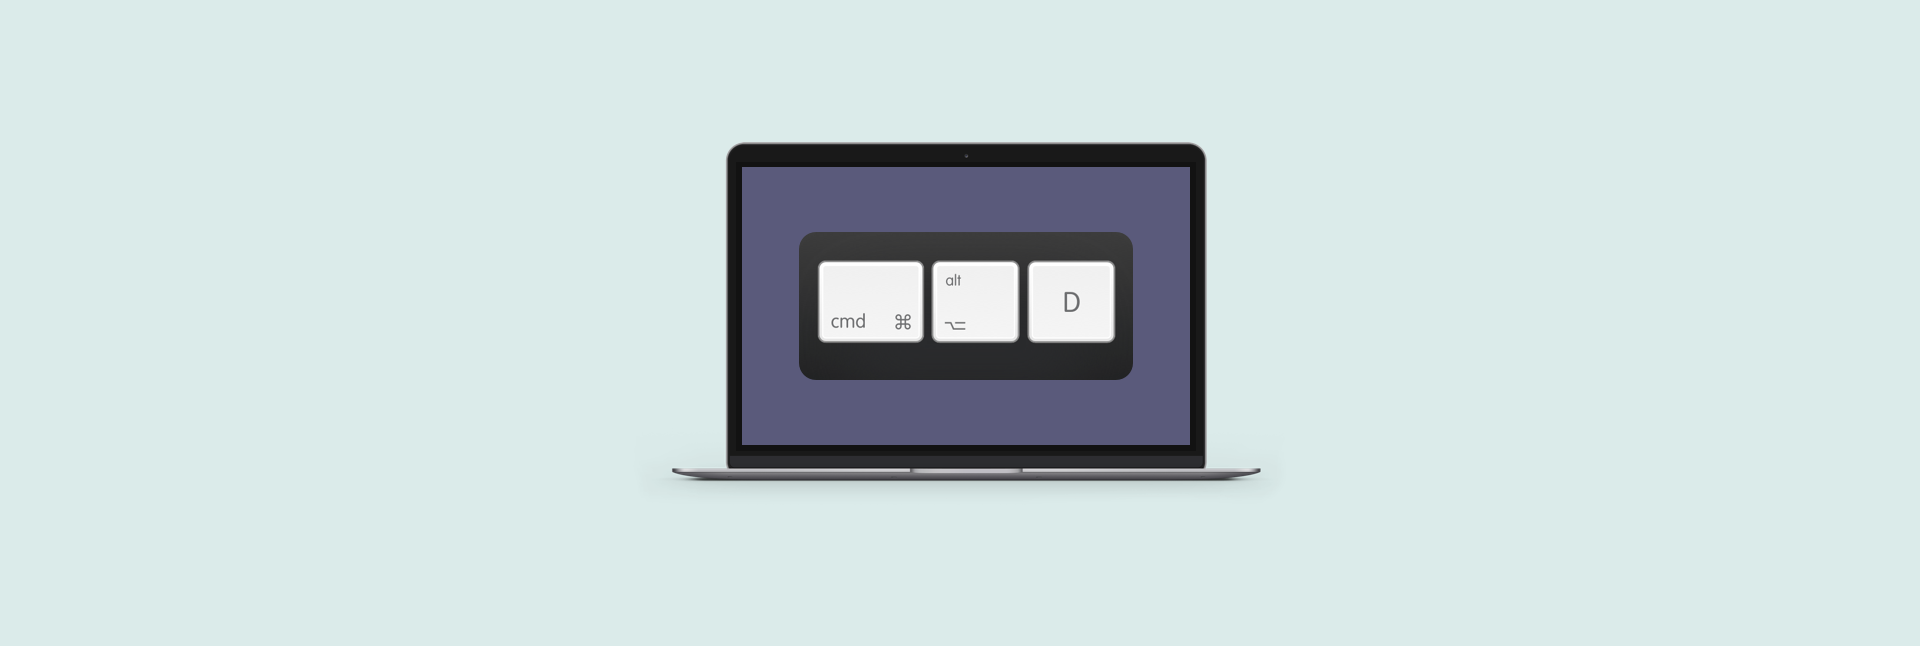 mac keyboard symbols vector